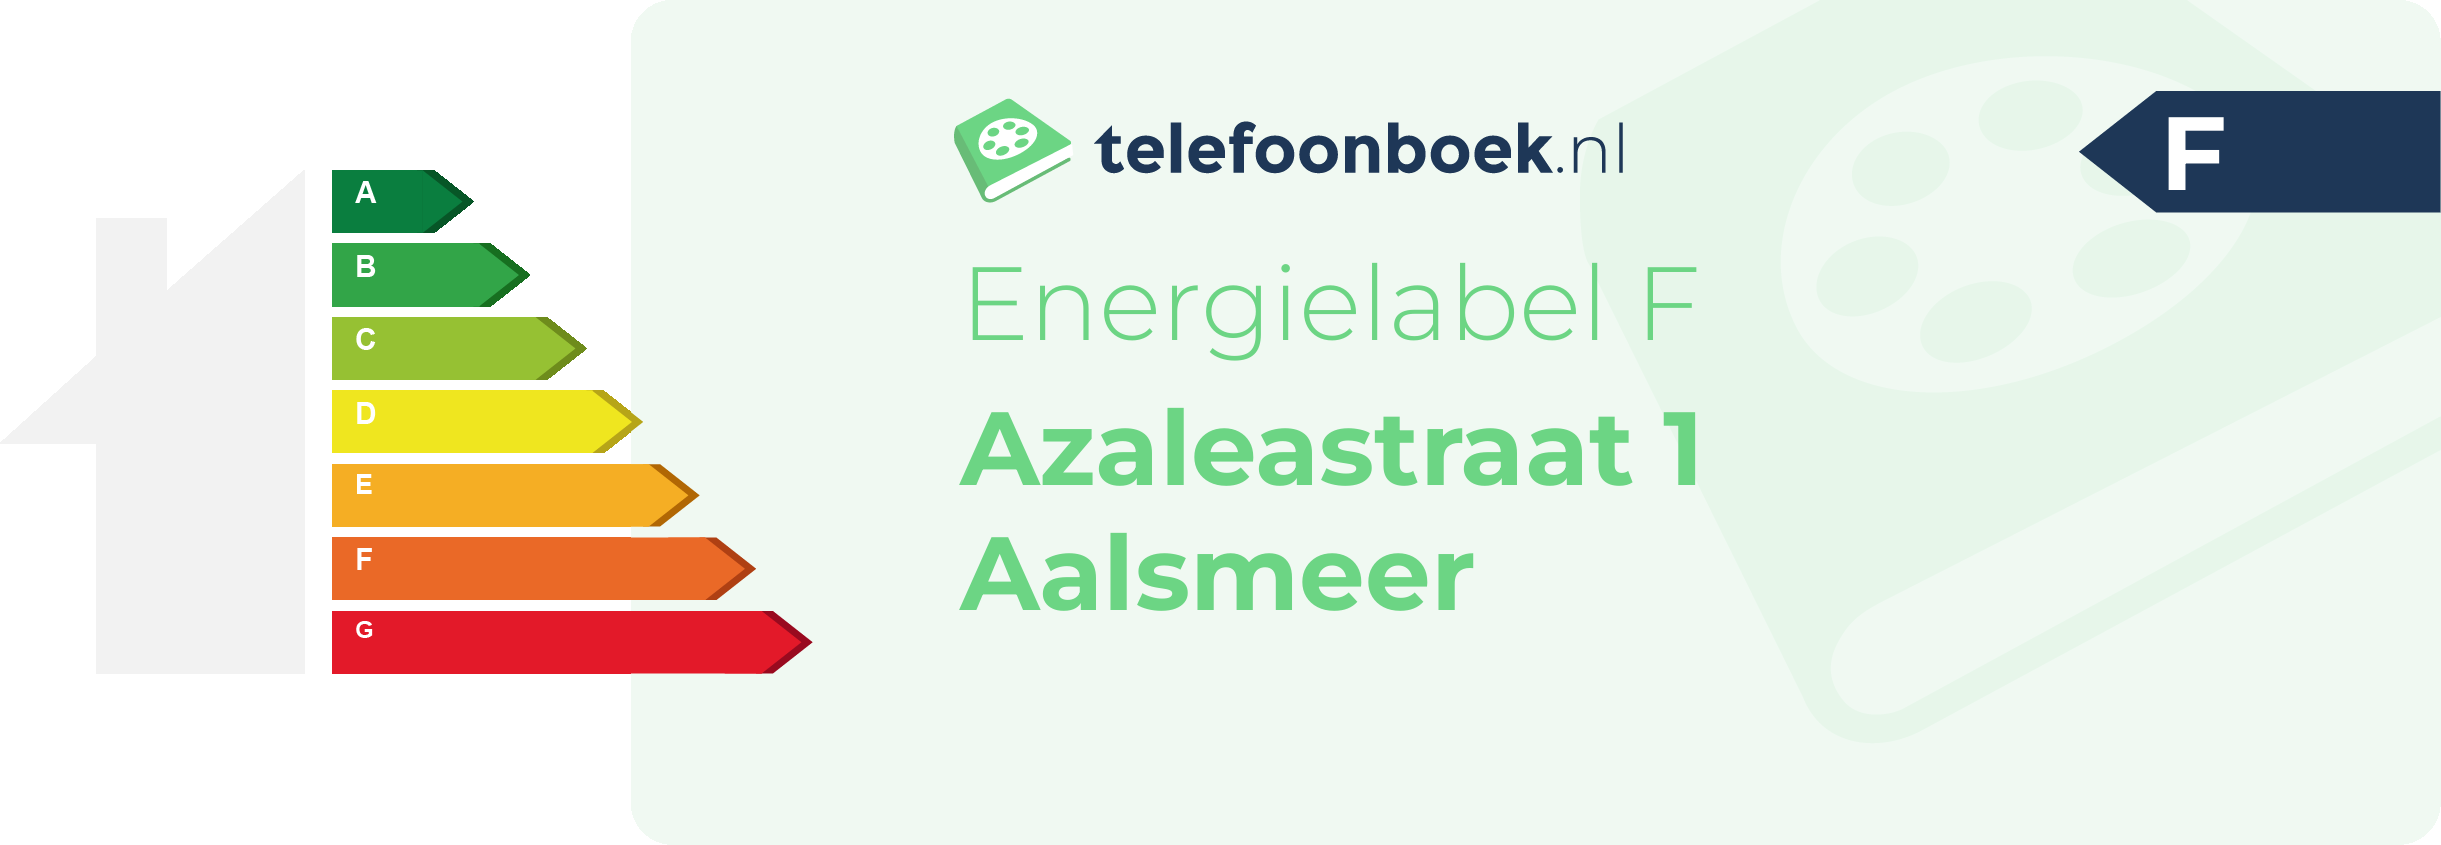 Energielabel Azaleastraat 1 Aalsmeer